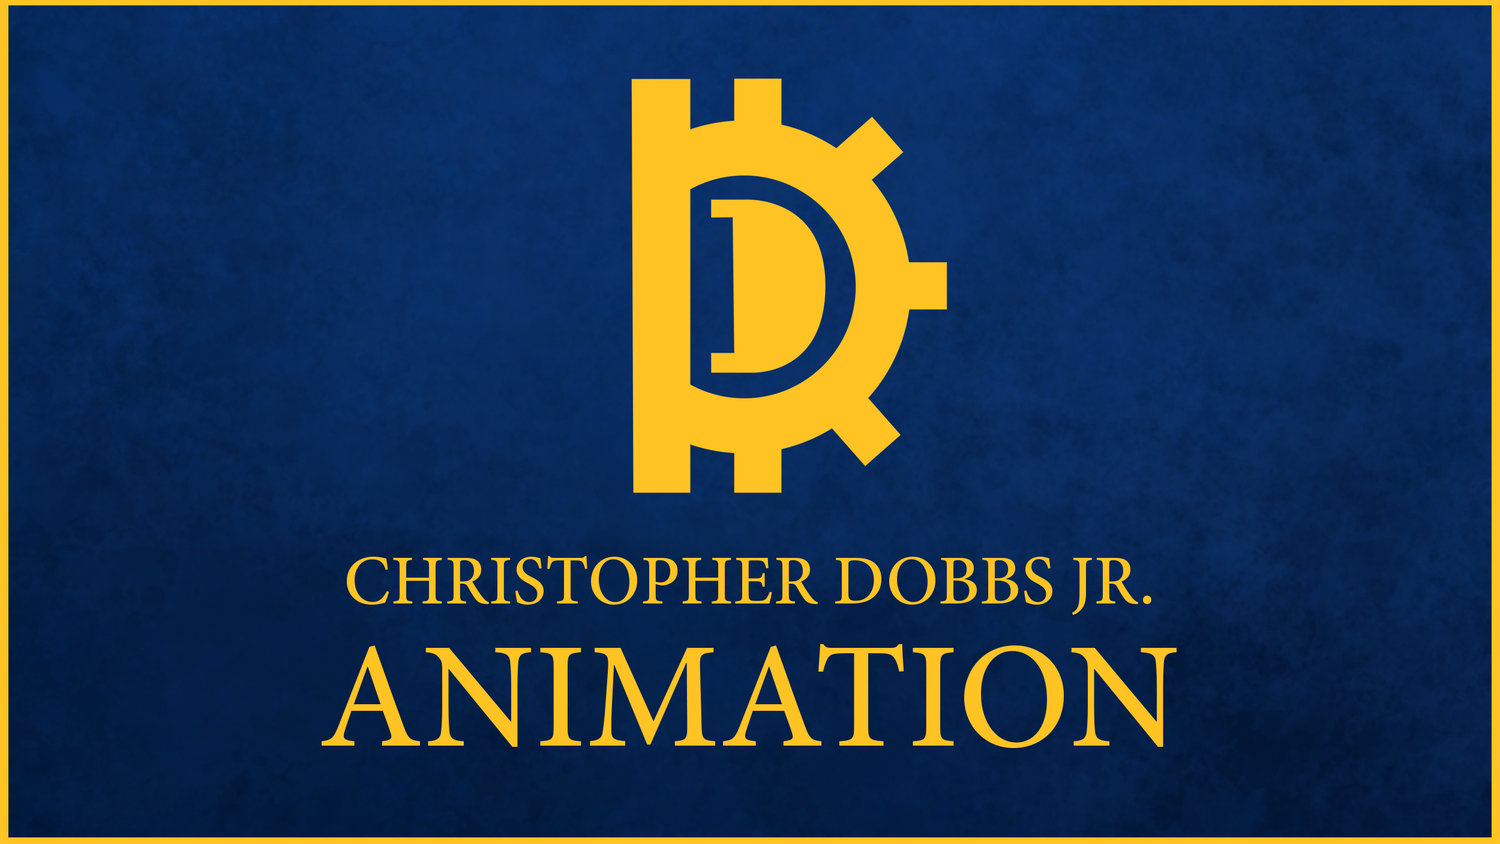 Christopher Dobbs Jr. Animation